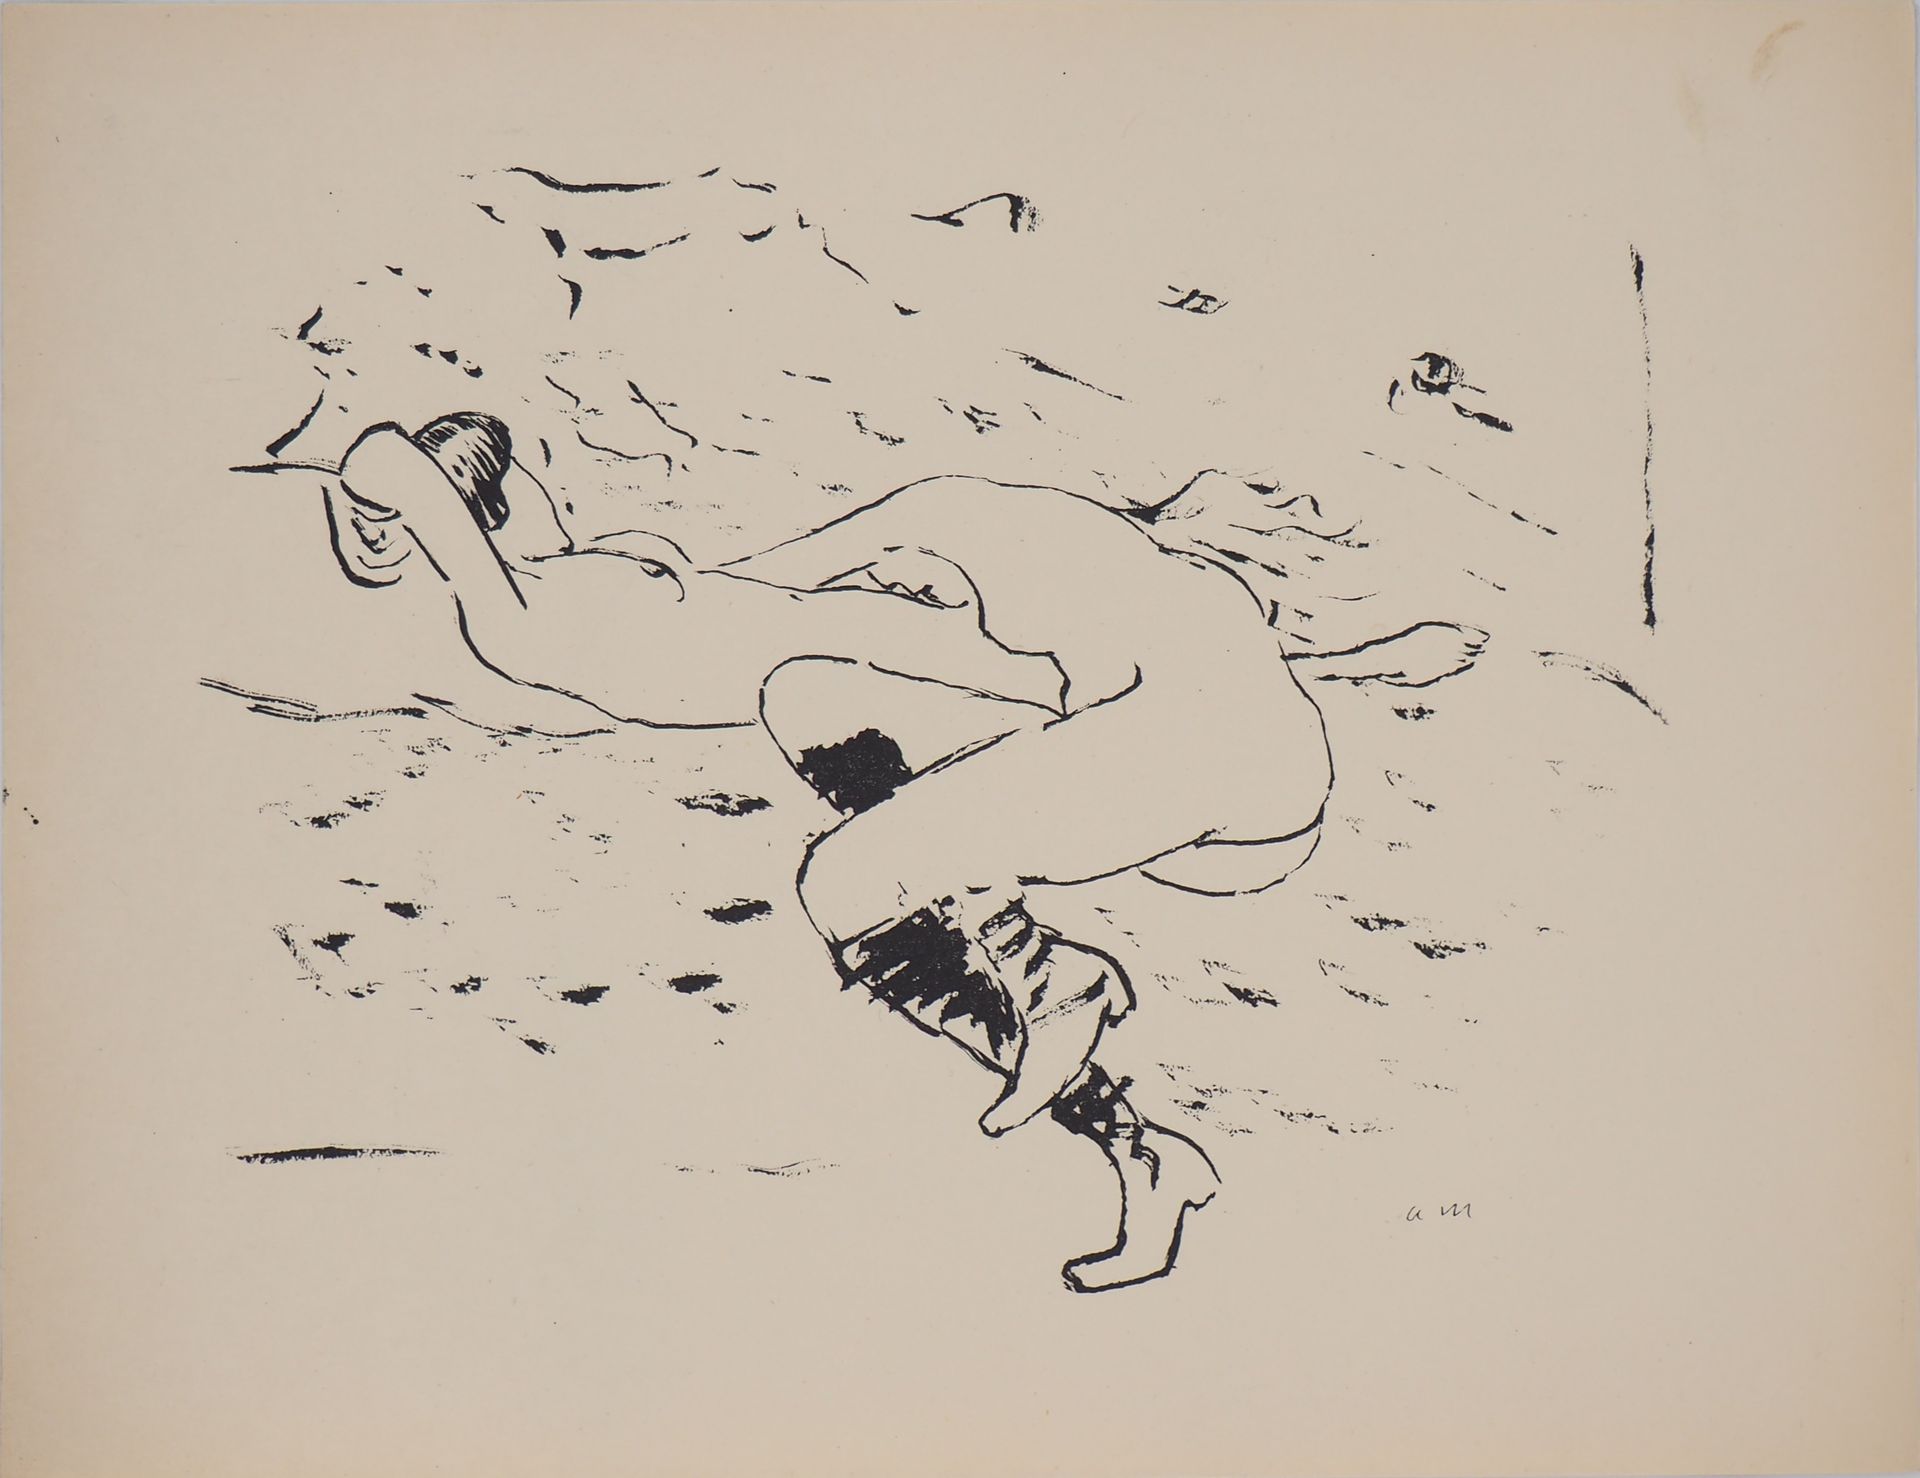 Albert Marquet Albert Marquet

恋人》，1925年

原始石版画

板块中的签名

在日本纸上 25 x 33厘米

信息：由艺术&hellip;